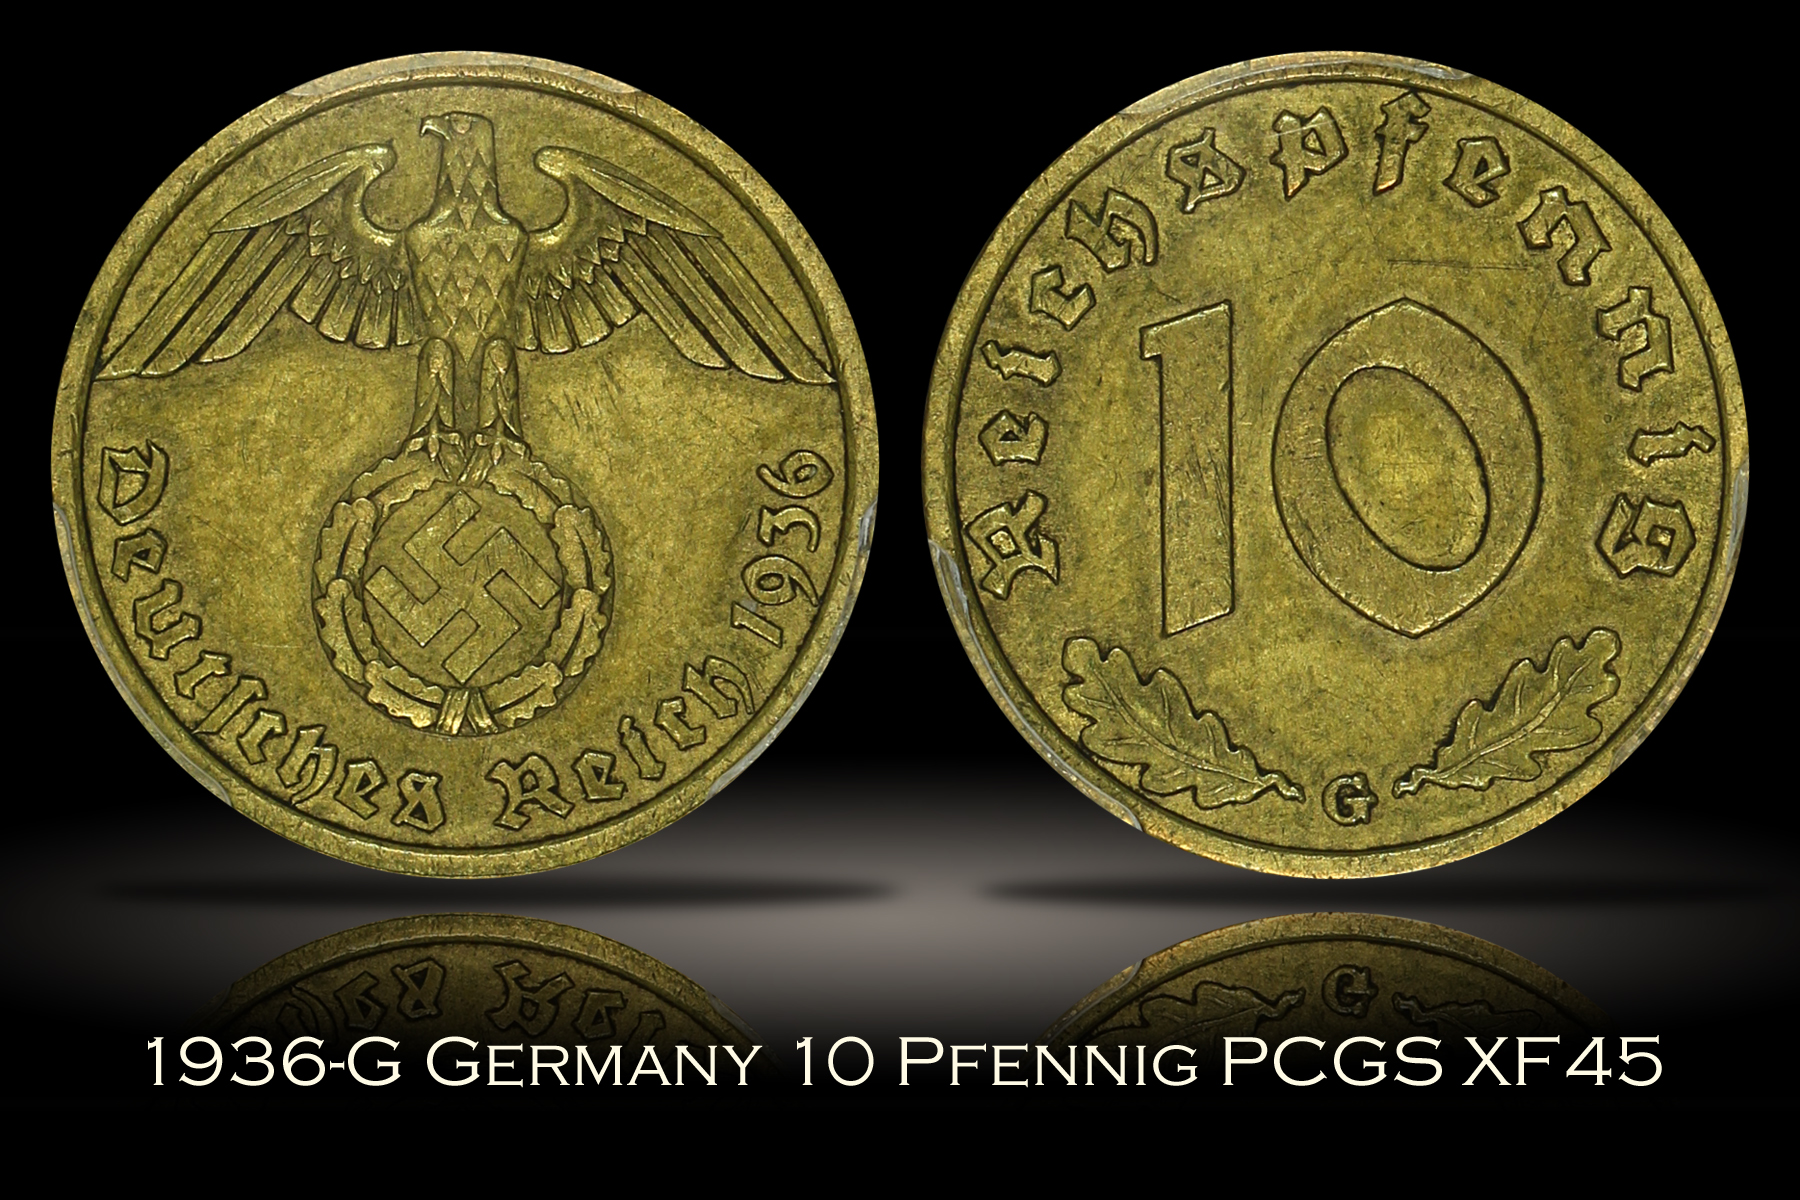 1936-G Germany Third Reich 10 Reichpfennig PCGS XF45